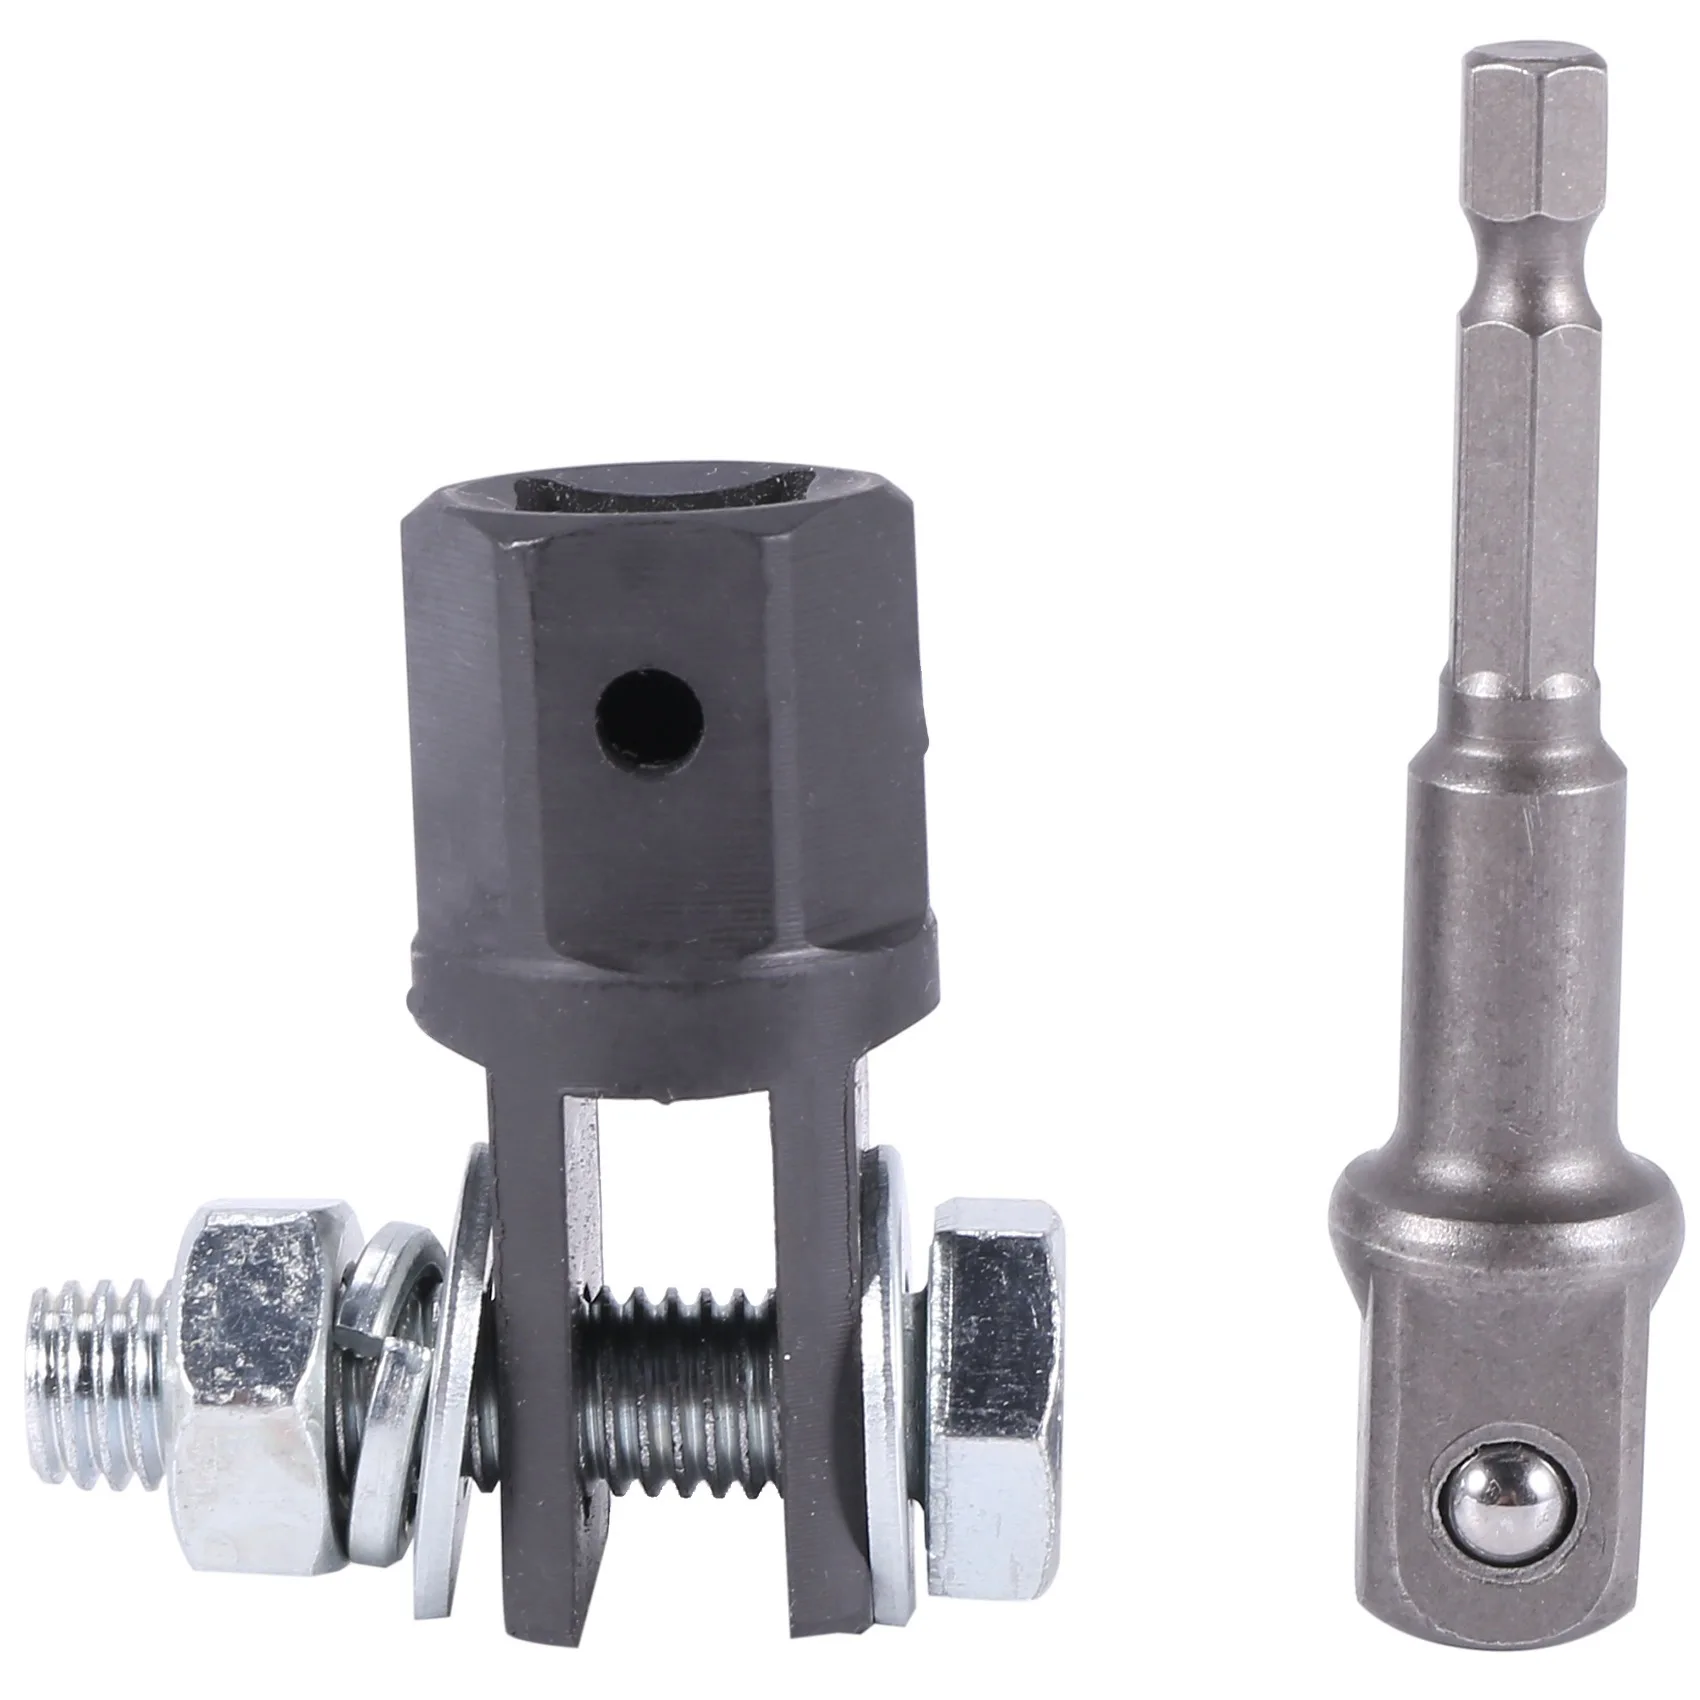 

Universal Scissor Jack Adapter 1/2 Inch Ball Extension Rod Impact Wrench Tool Car Disassemble Tool IJA001